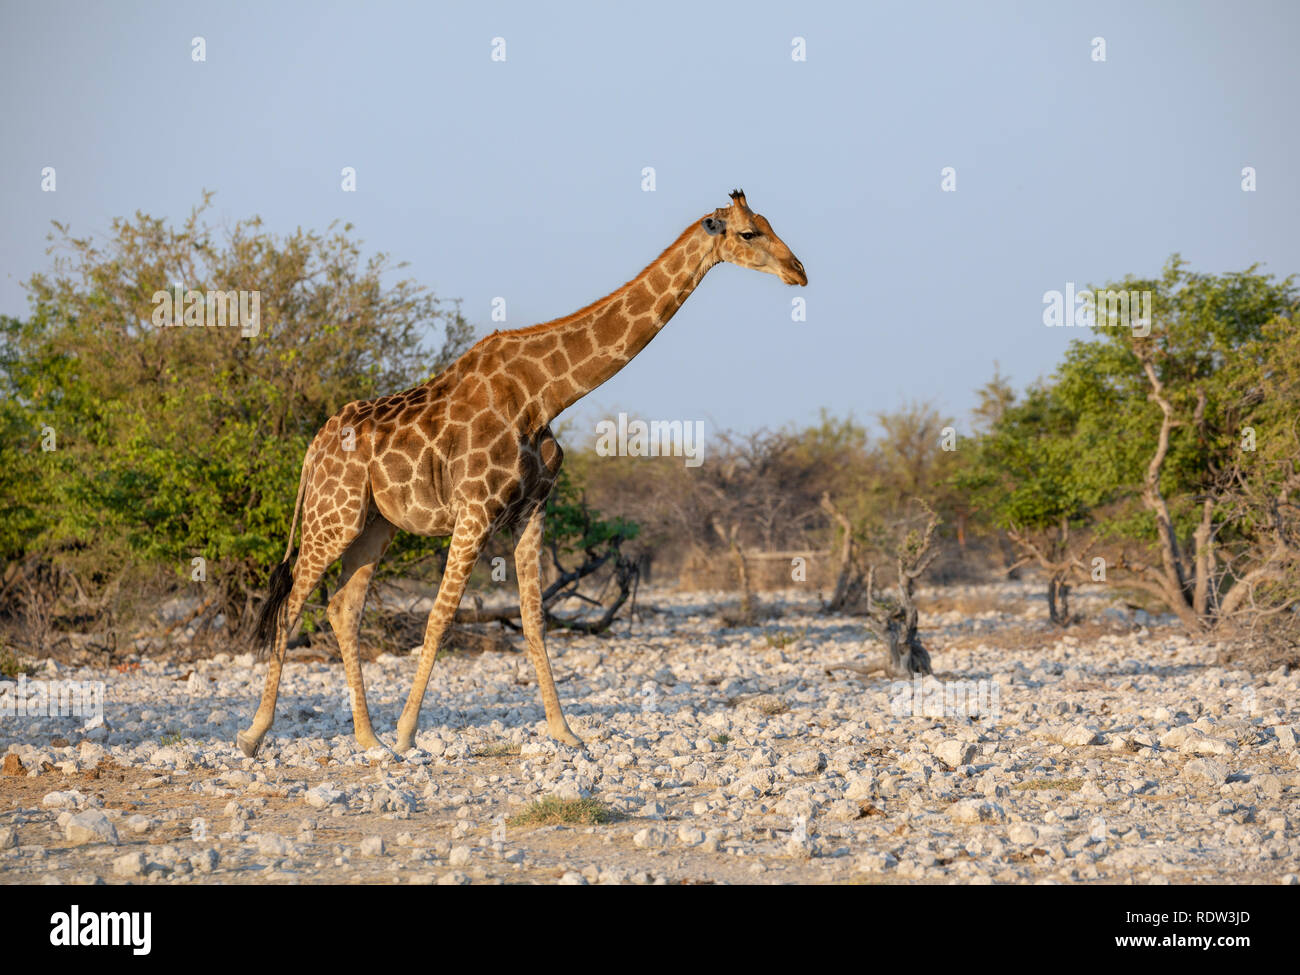 Southern giraffe (Giraffa giraffa). Subspecies - Angolan Giraffe or Namibian Giraffe (Giraffa giraffa angolensis) Stock Photo